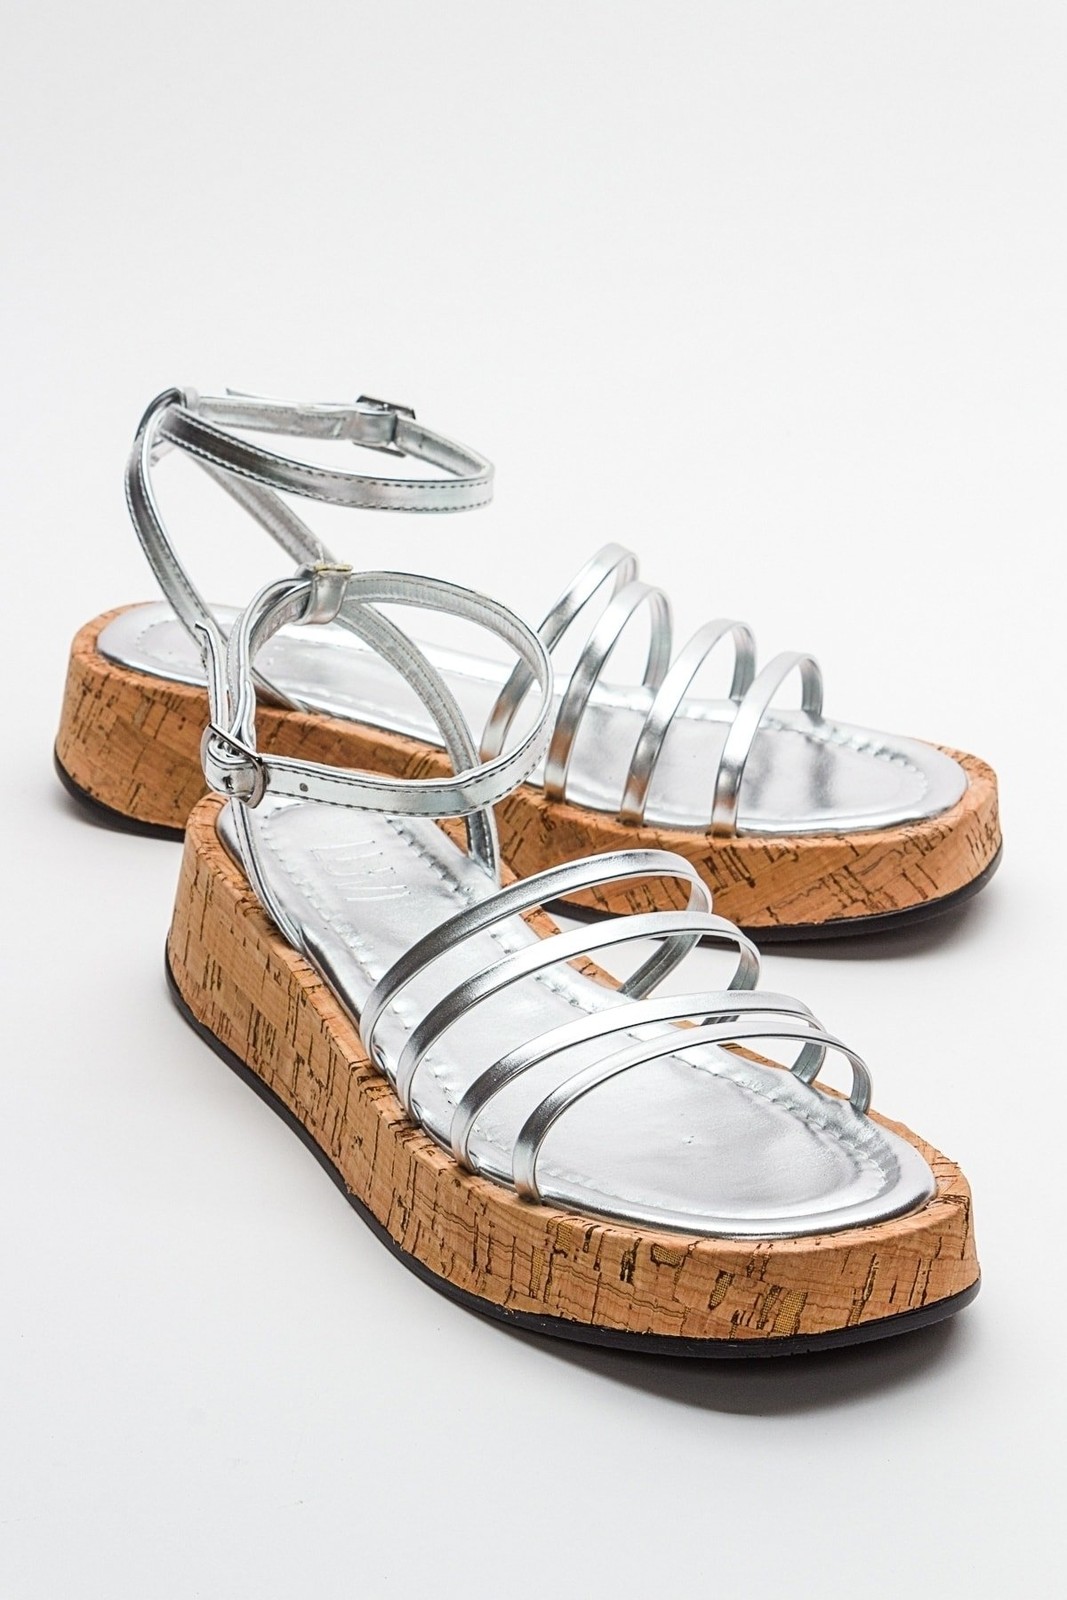 LuviShoes ANGELA Women's Metallic Silver Sandals